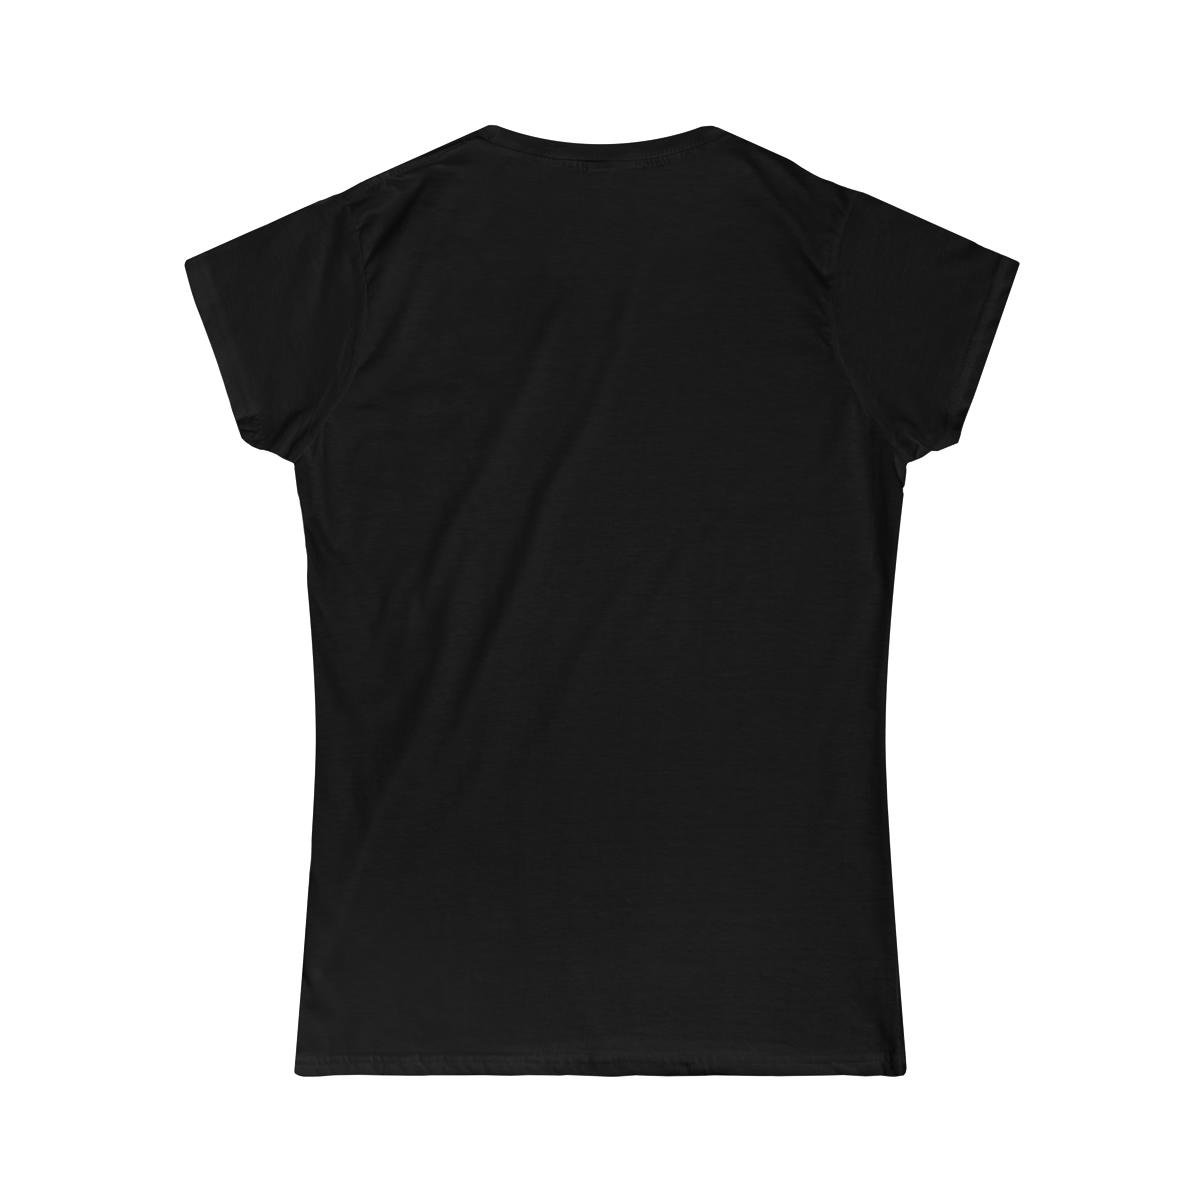 Crux – Failure To Yield Women’s Short Sleeve Tshirt